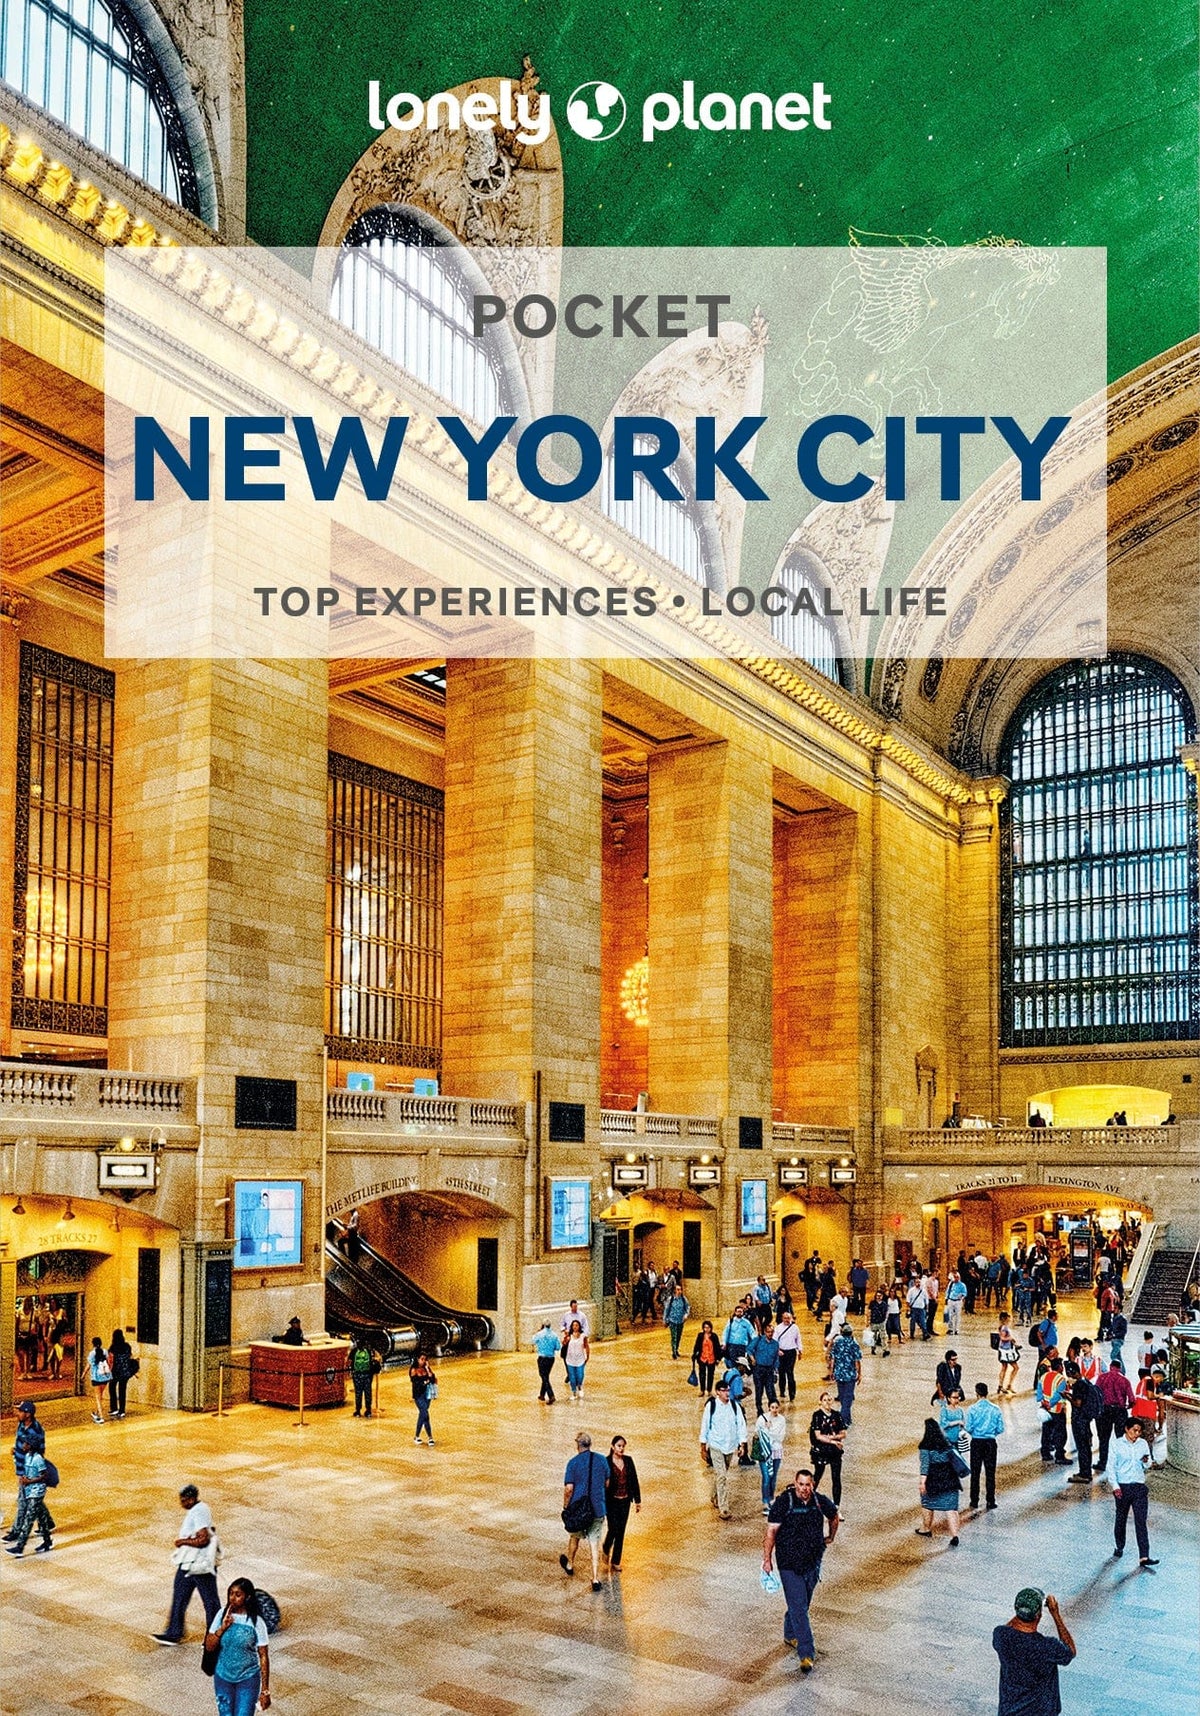 Pocket New York City